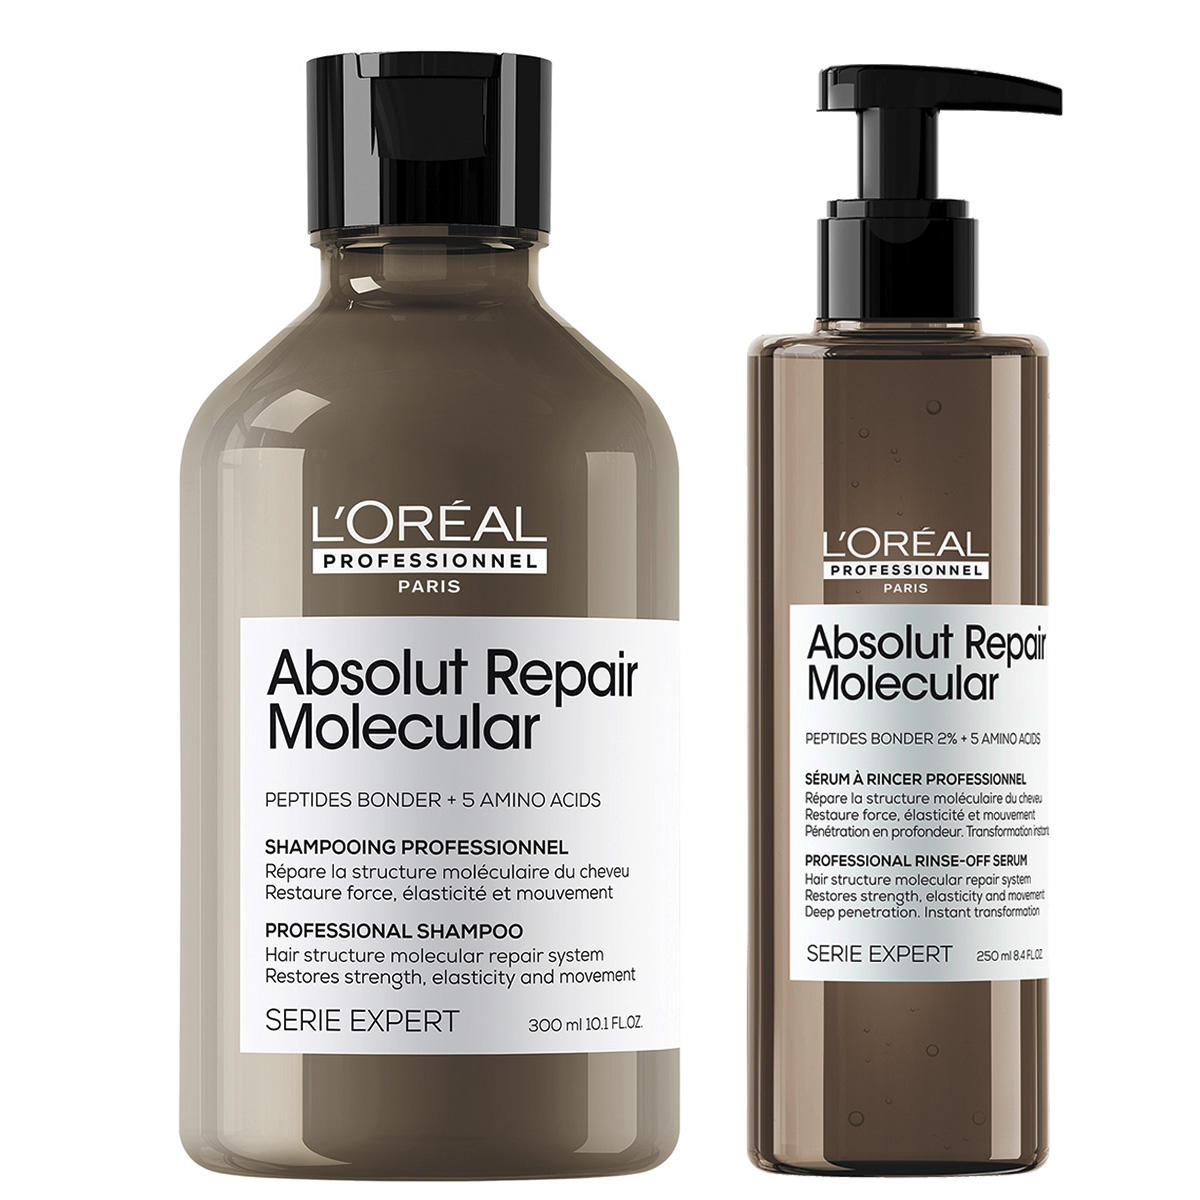 l'oréal professionnel paris serie expert absolut repair molecular set 1 shampoo + rinse off serum